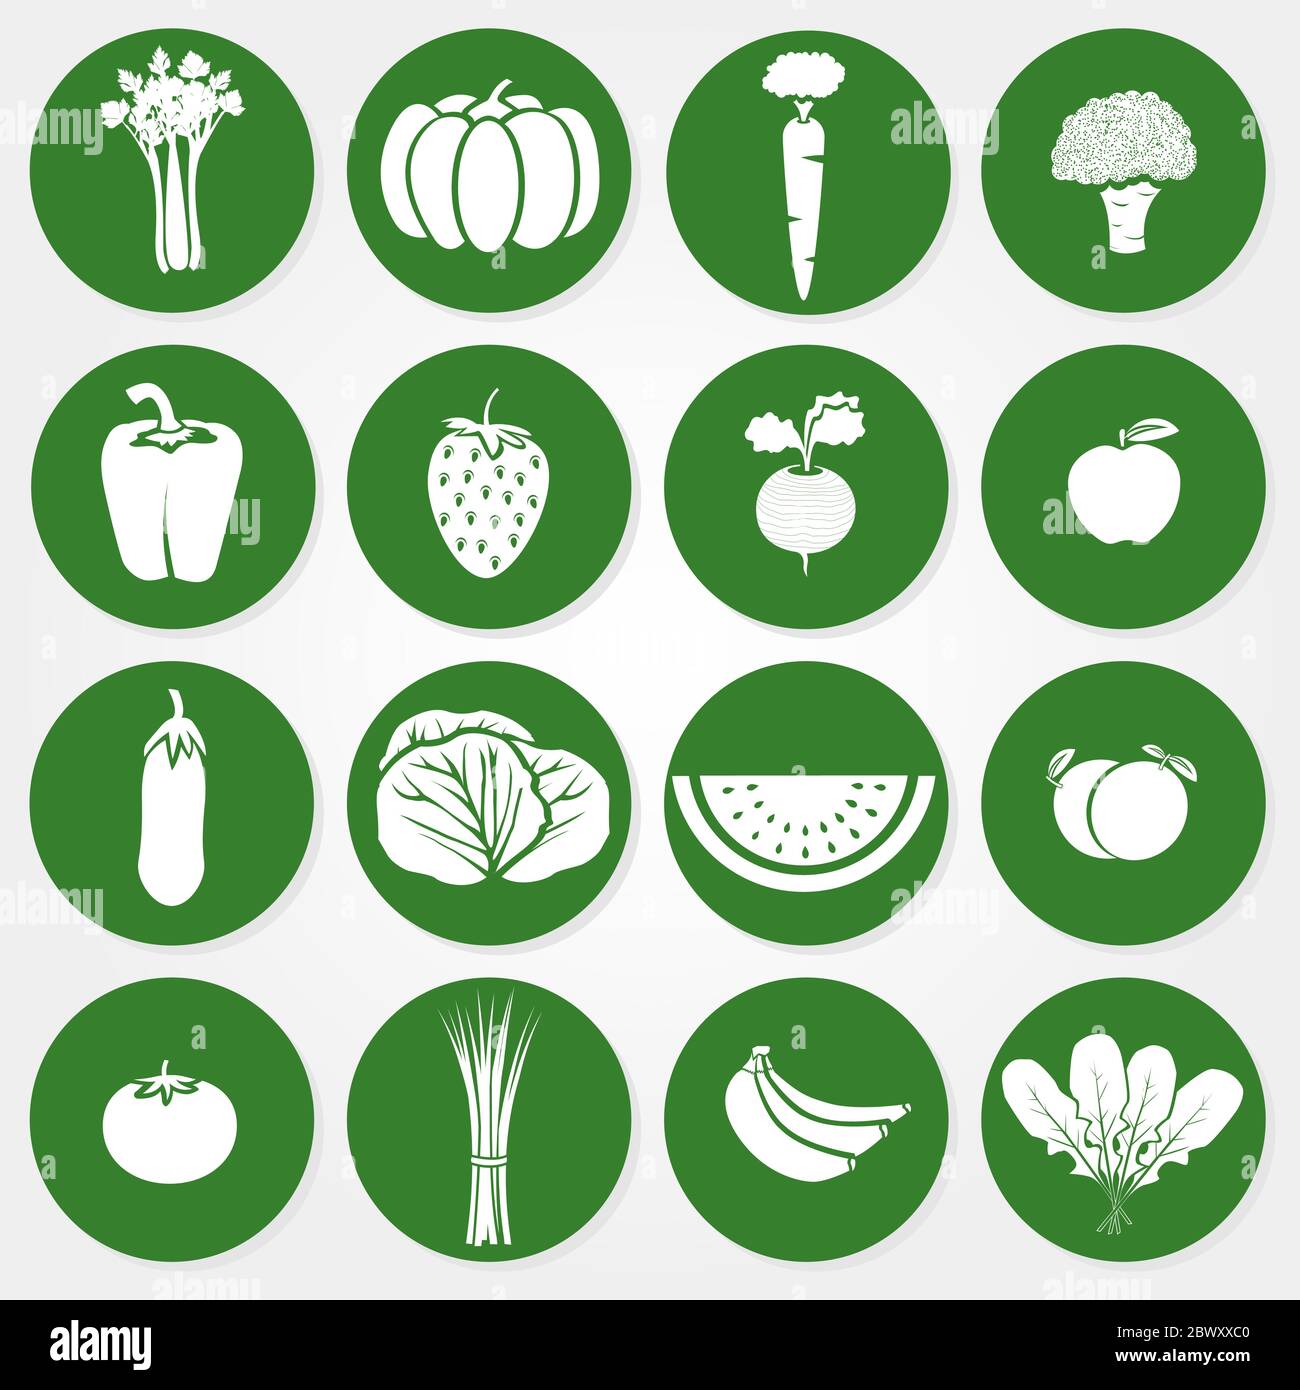 Sechzehn kreisförmige Symbole von Obst und Gemüse: Sellerie, Kürbis, Karotten, Brokkoli, Paprika, Erdbeerrüben, Äpfel, Auberginen, Kohl, Wasserme Stock Vektor